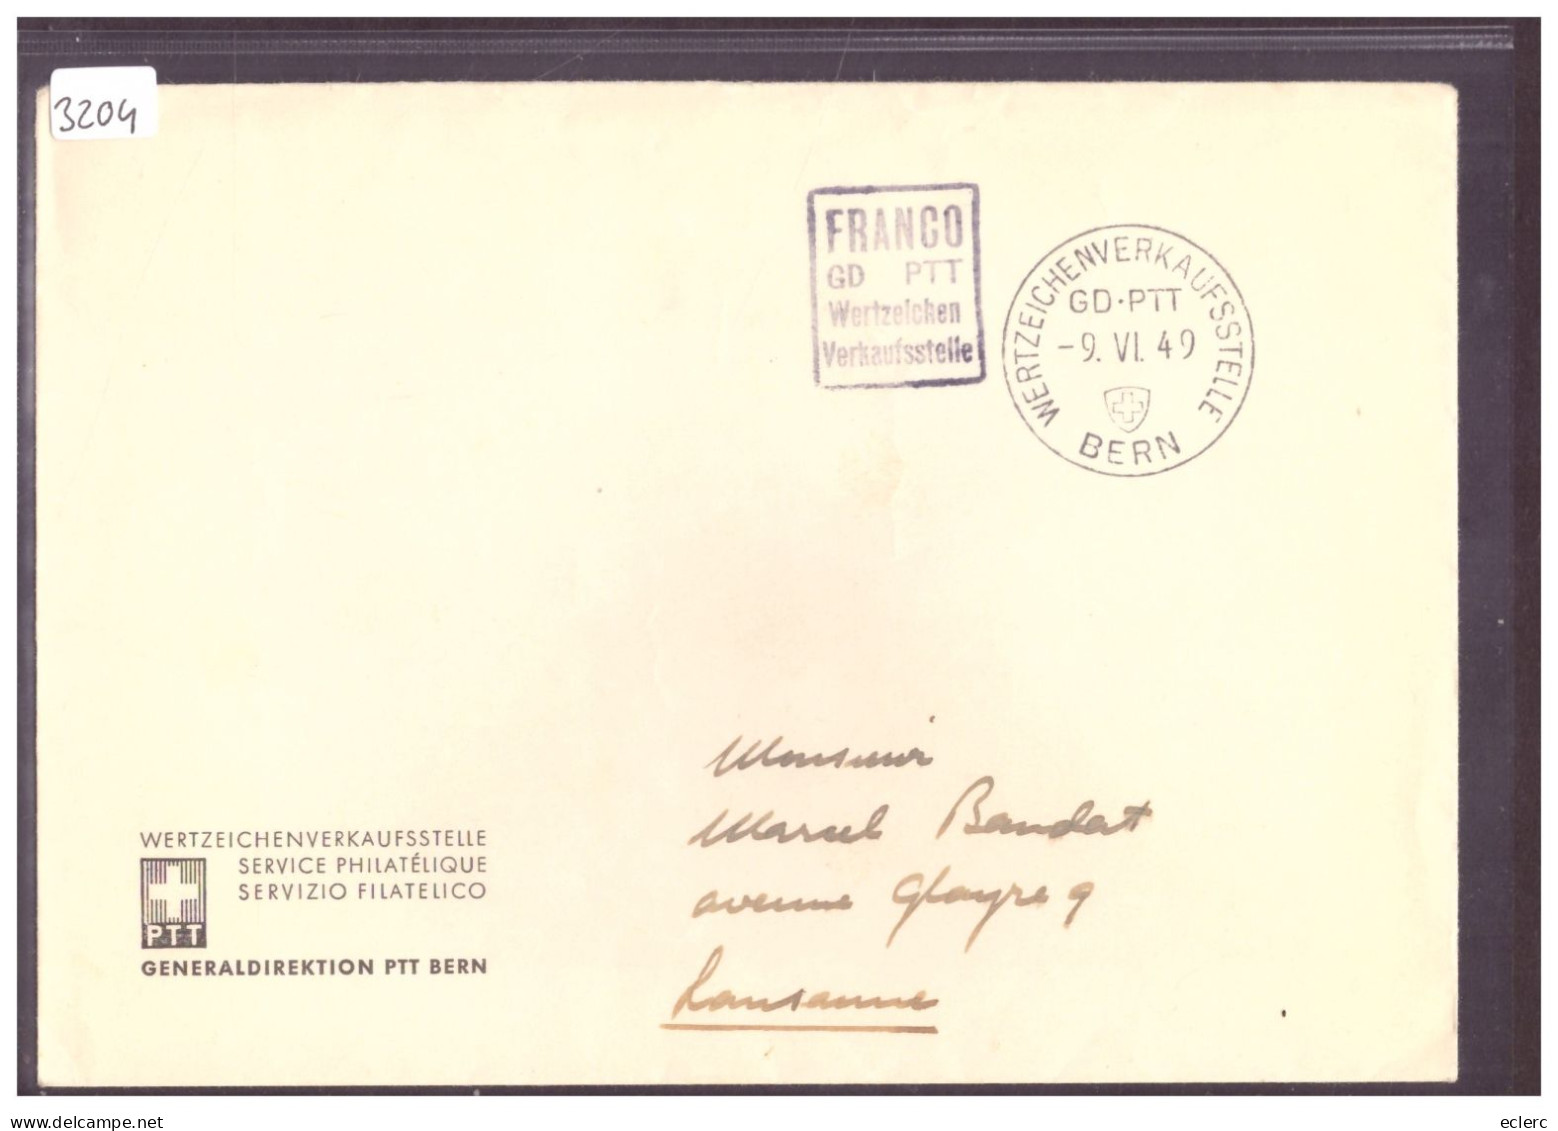 CACHET FRANCO GD PTT - WERTZEICHEN VERKAUFSSTELLE 1949 - Postmark Collection